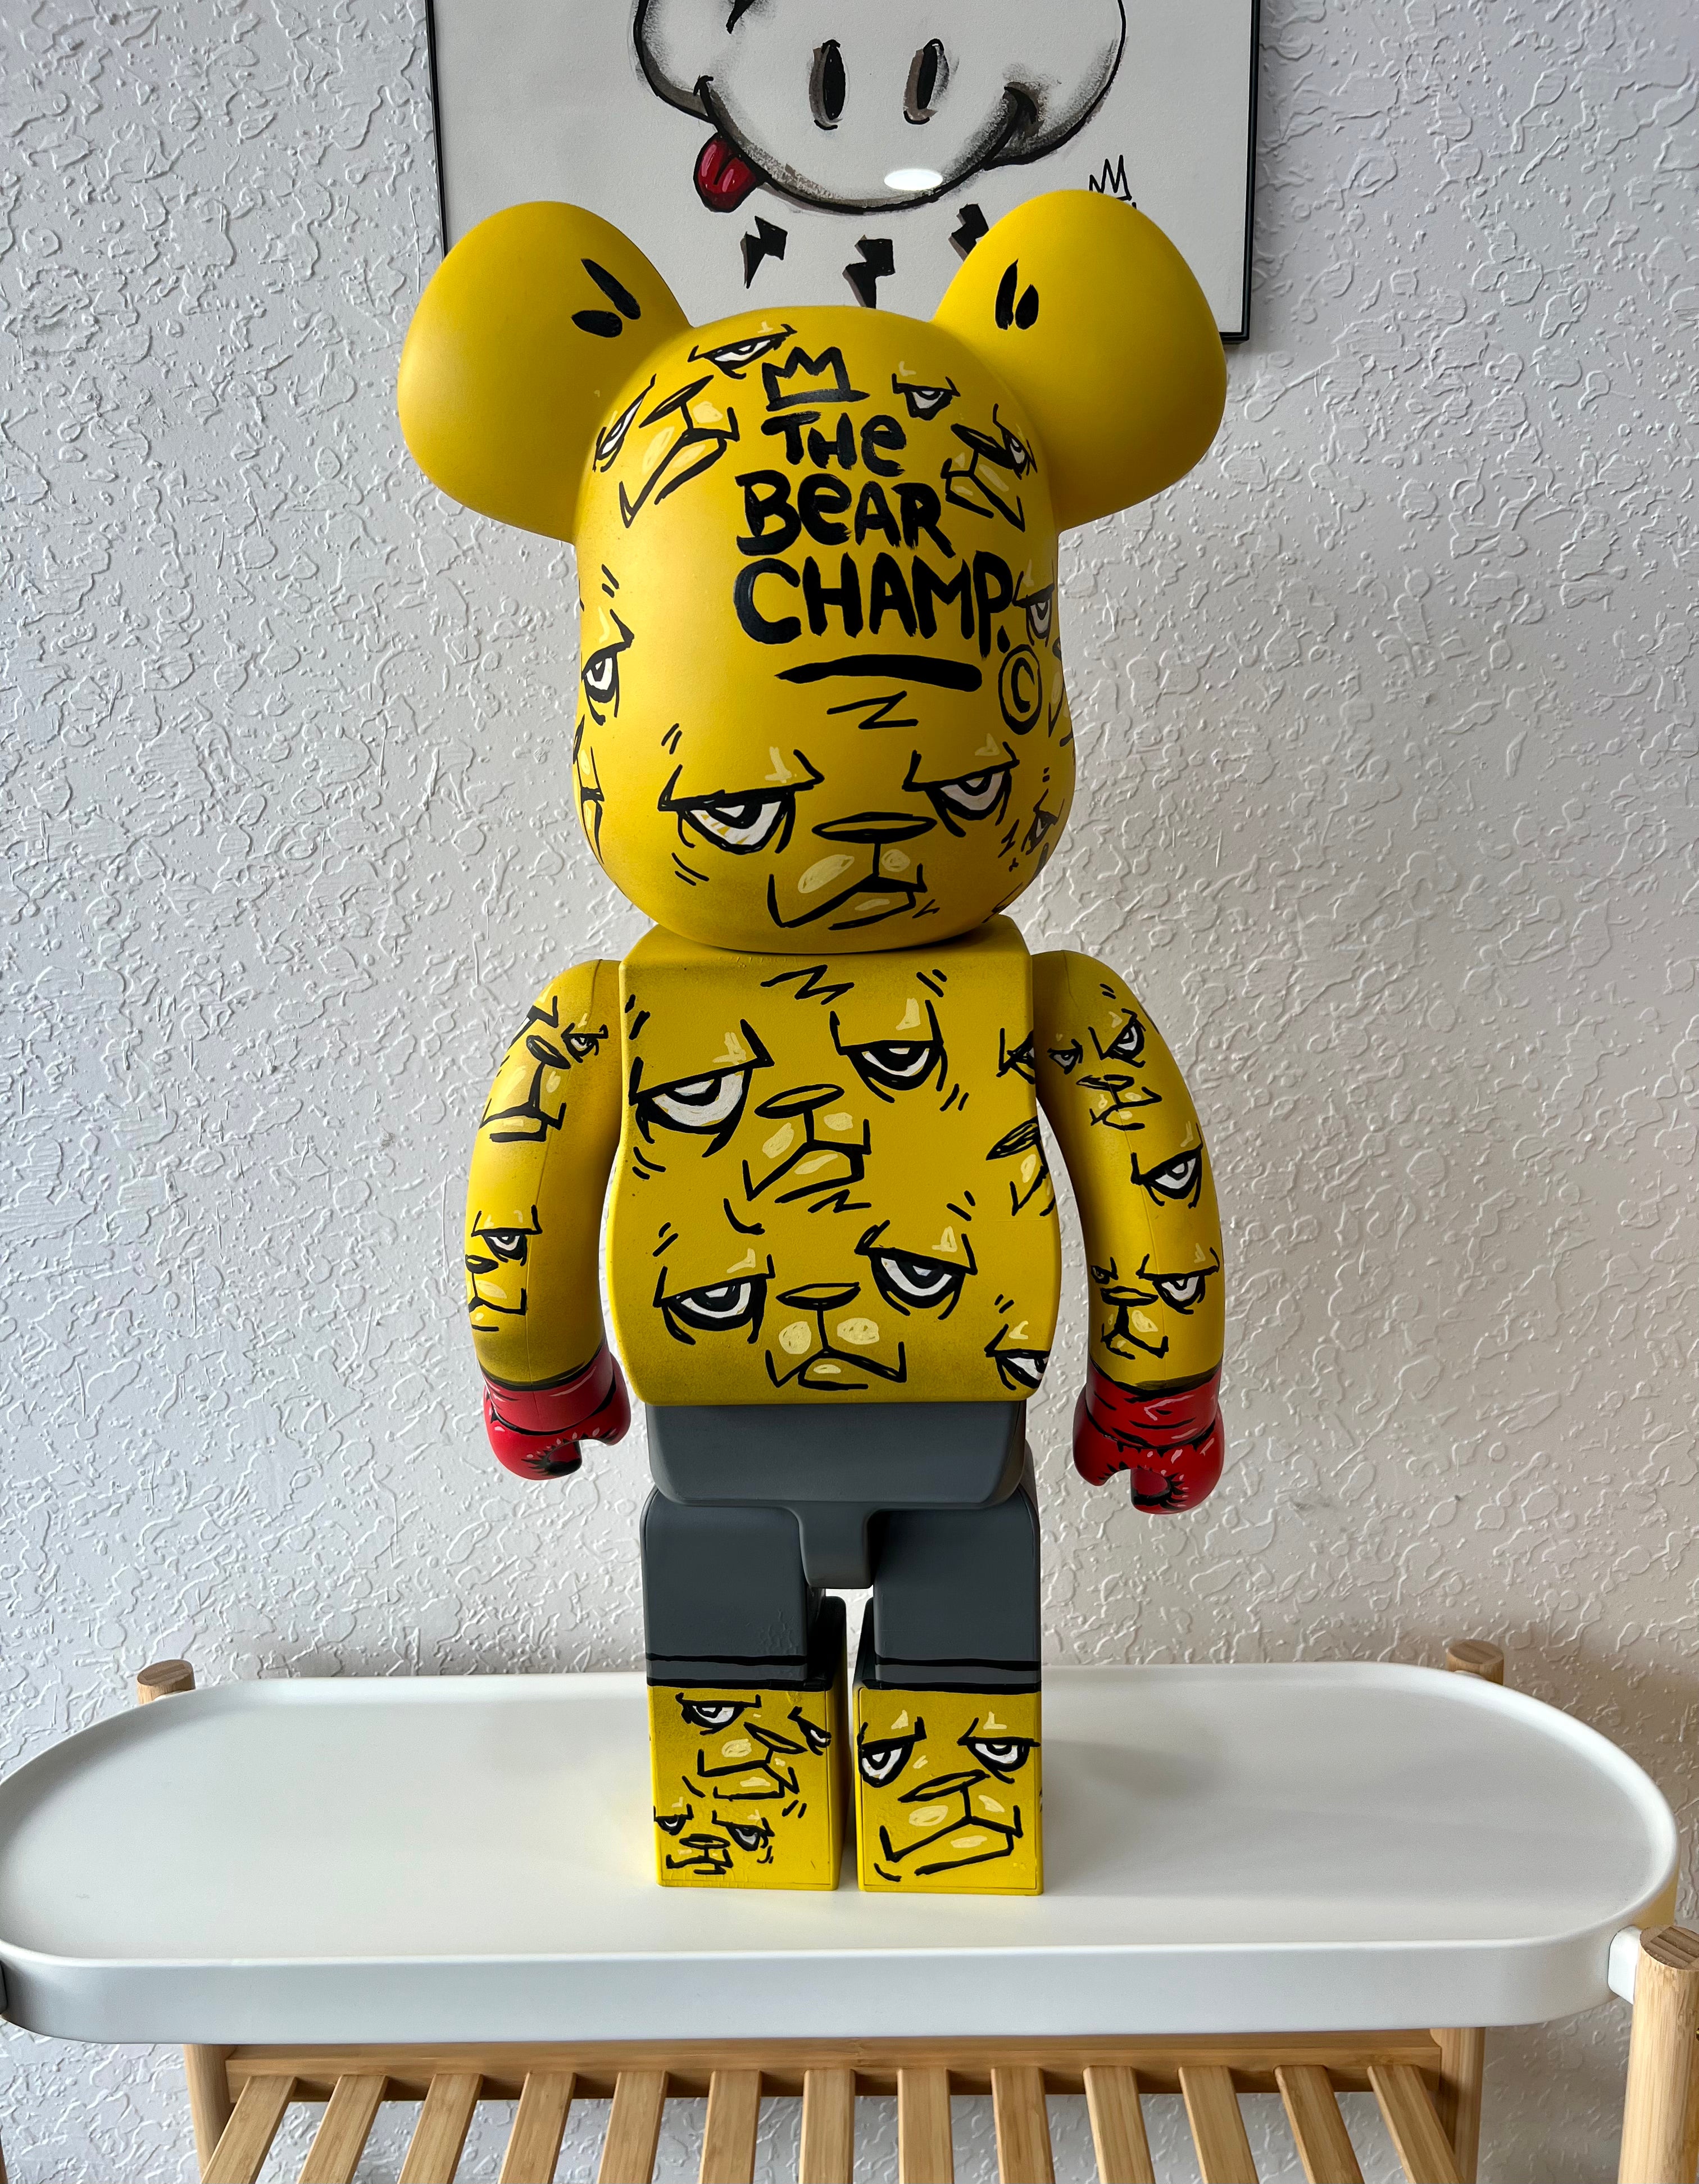 It's Sketchy - The Bear Brick Champ by JC Rivera